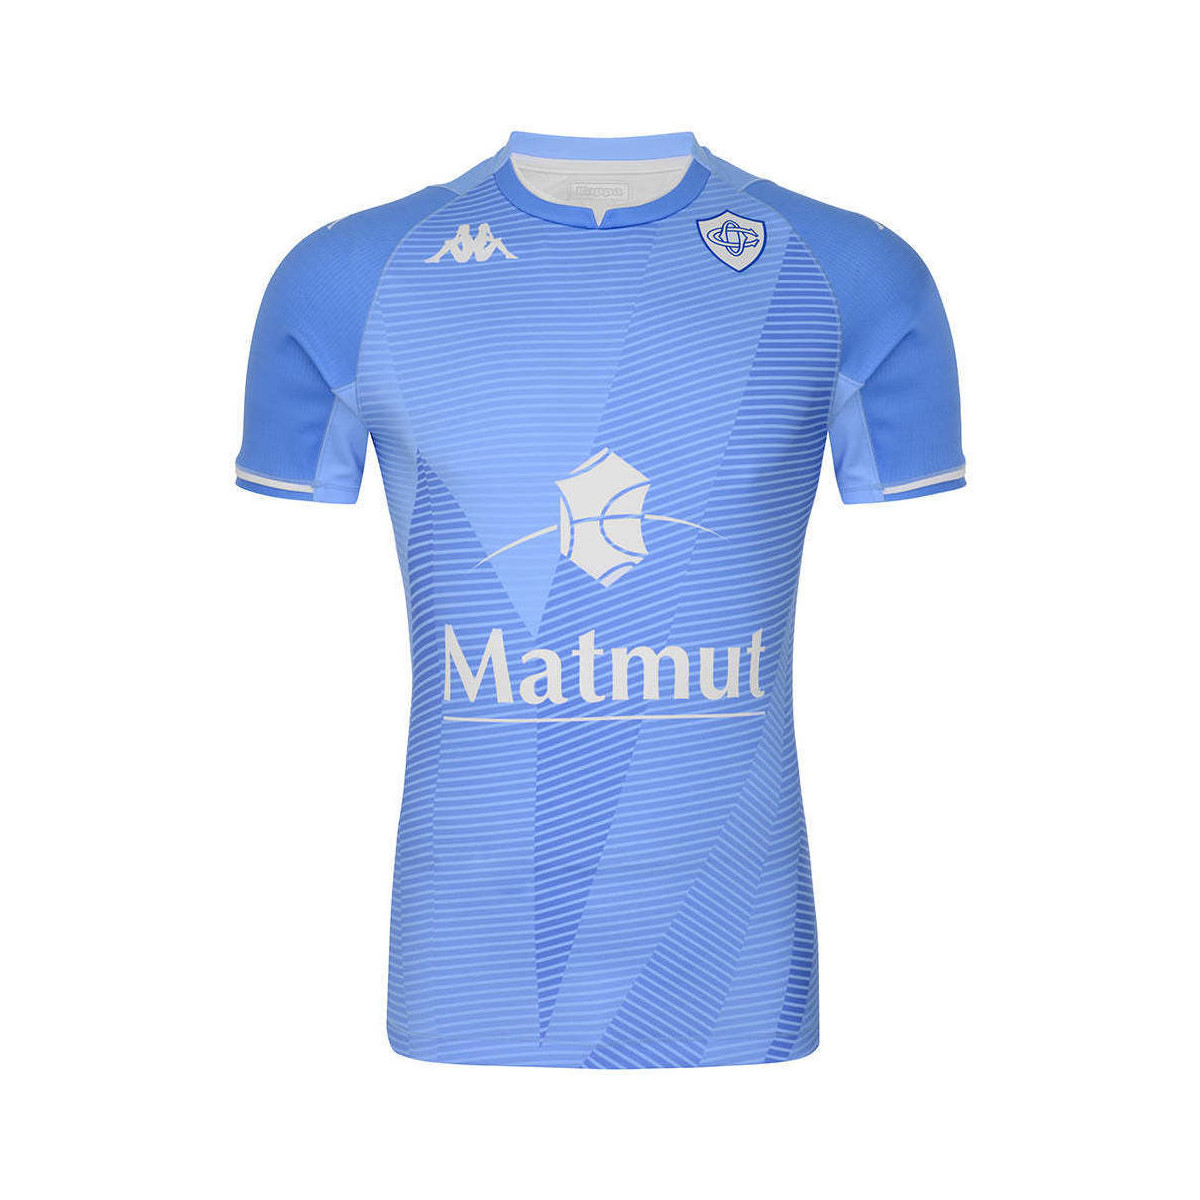 Vêtements Garçon T-shirts manches courtes Kappa Maillot Kombat Third Castres Olympique Bleu